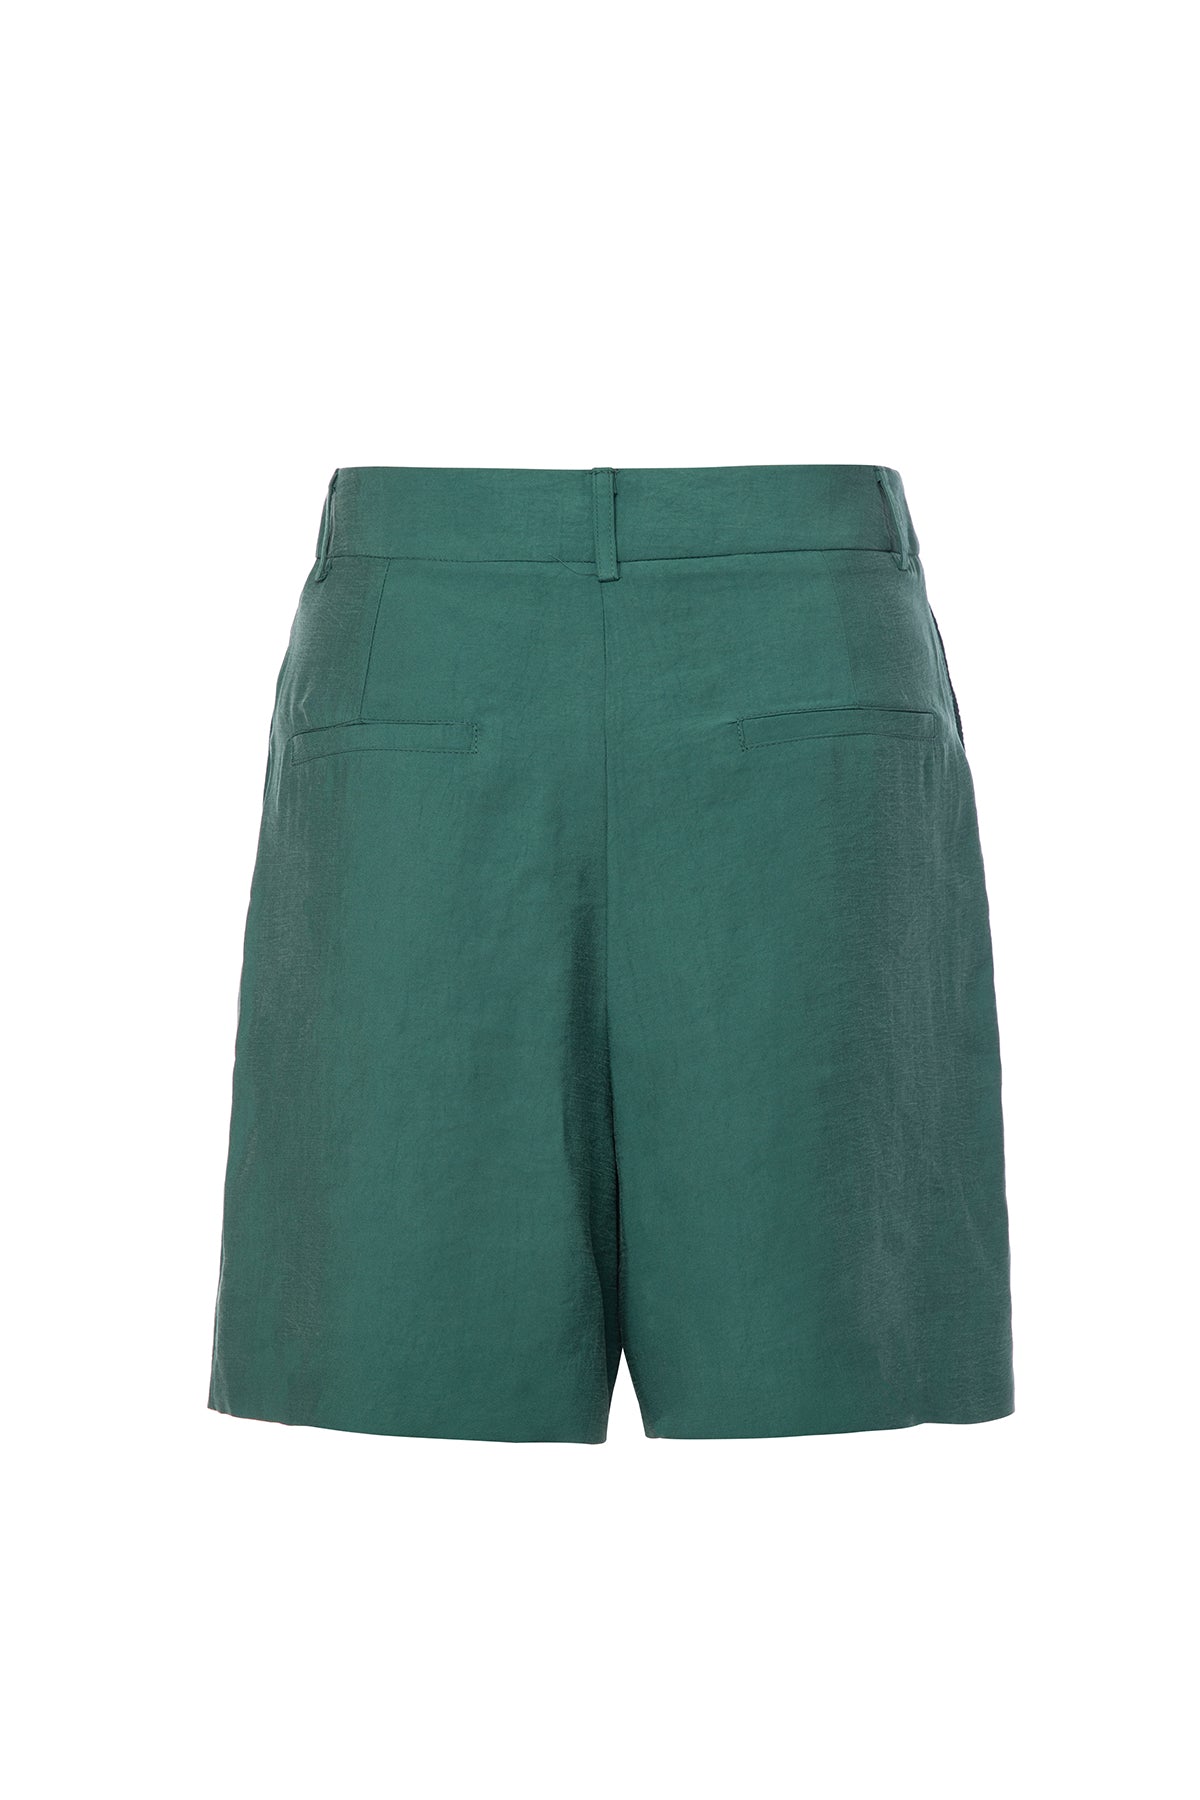 High Waist Pleated Green Shorts